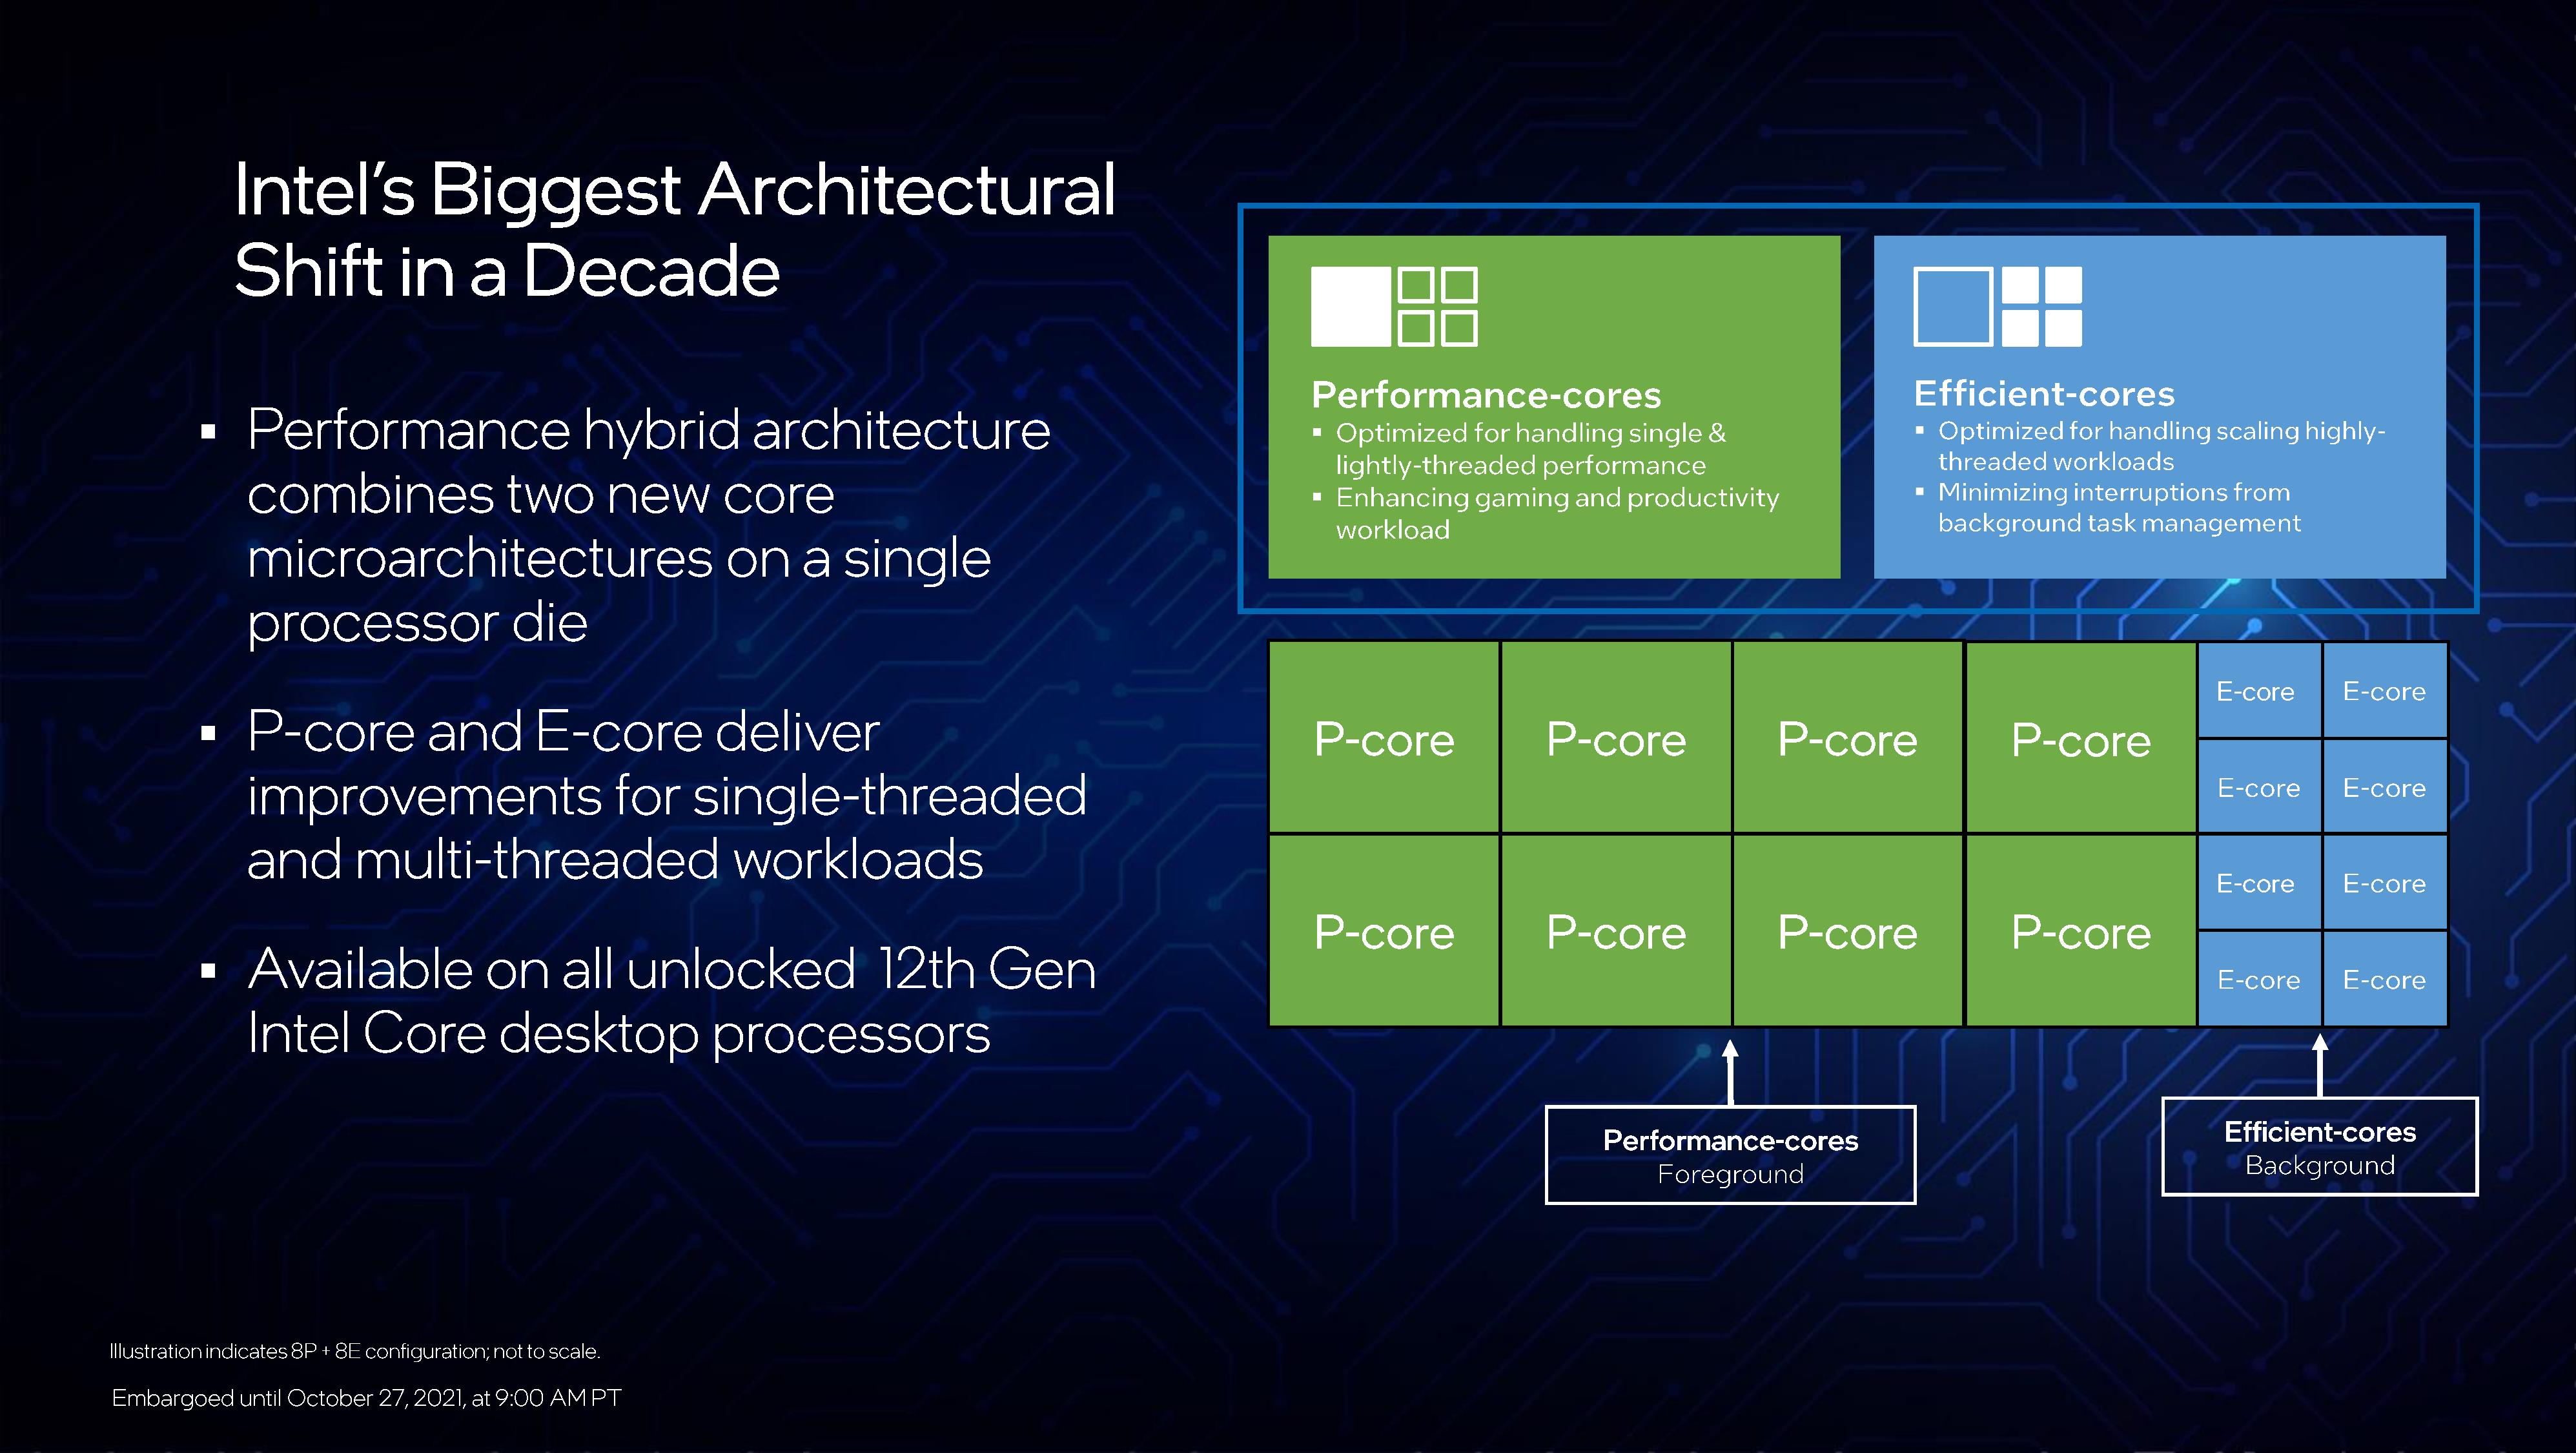 Intel Core i5-12600K review: Intel's new hybrid core design shines